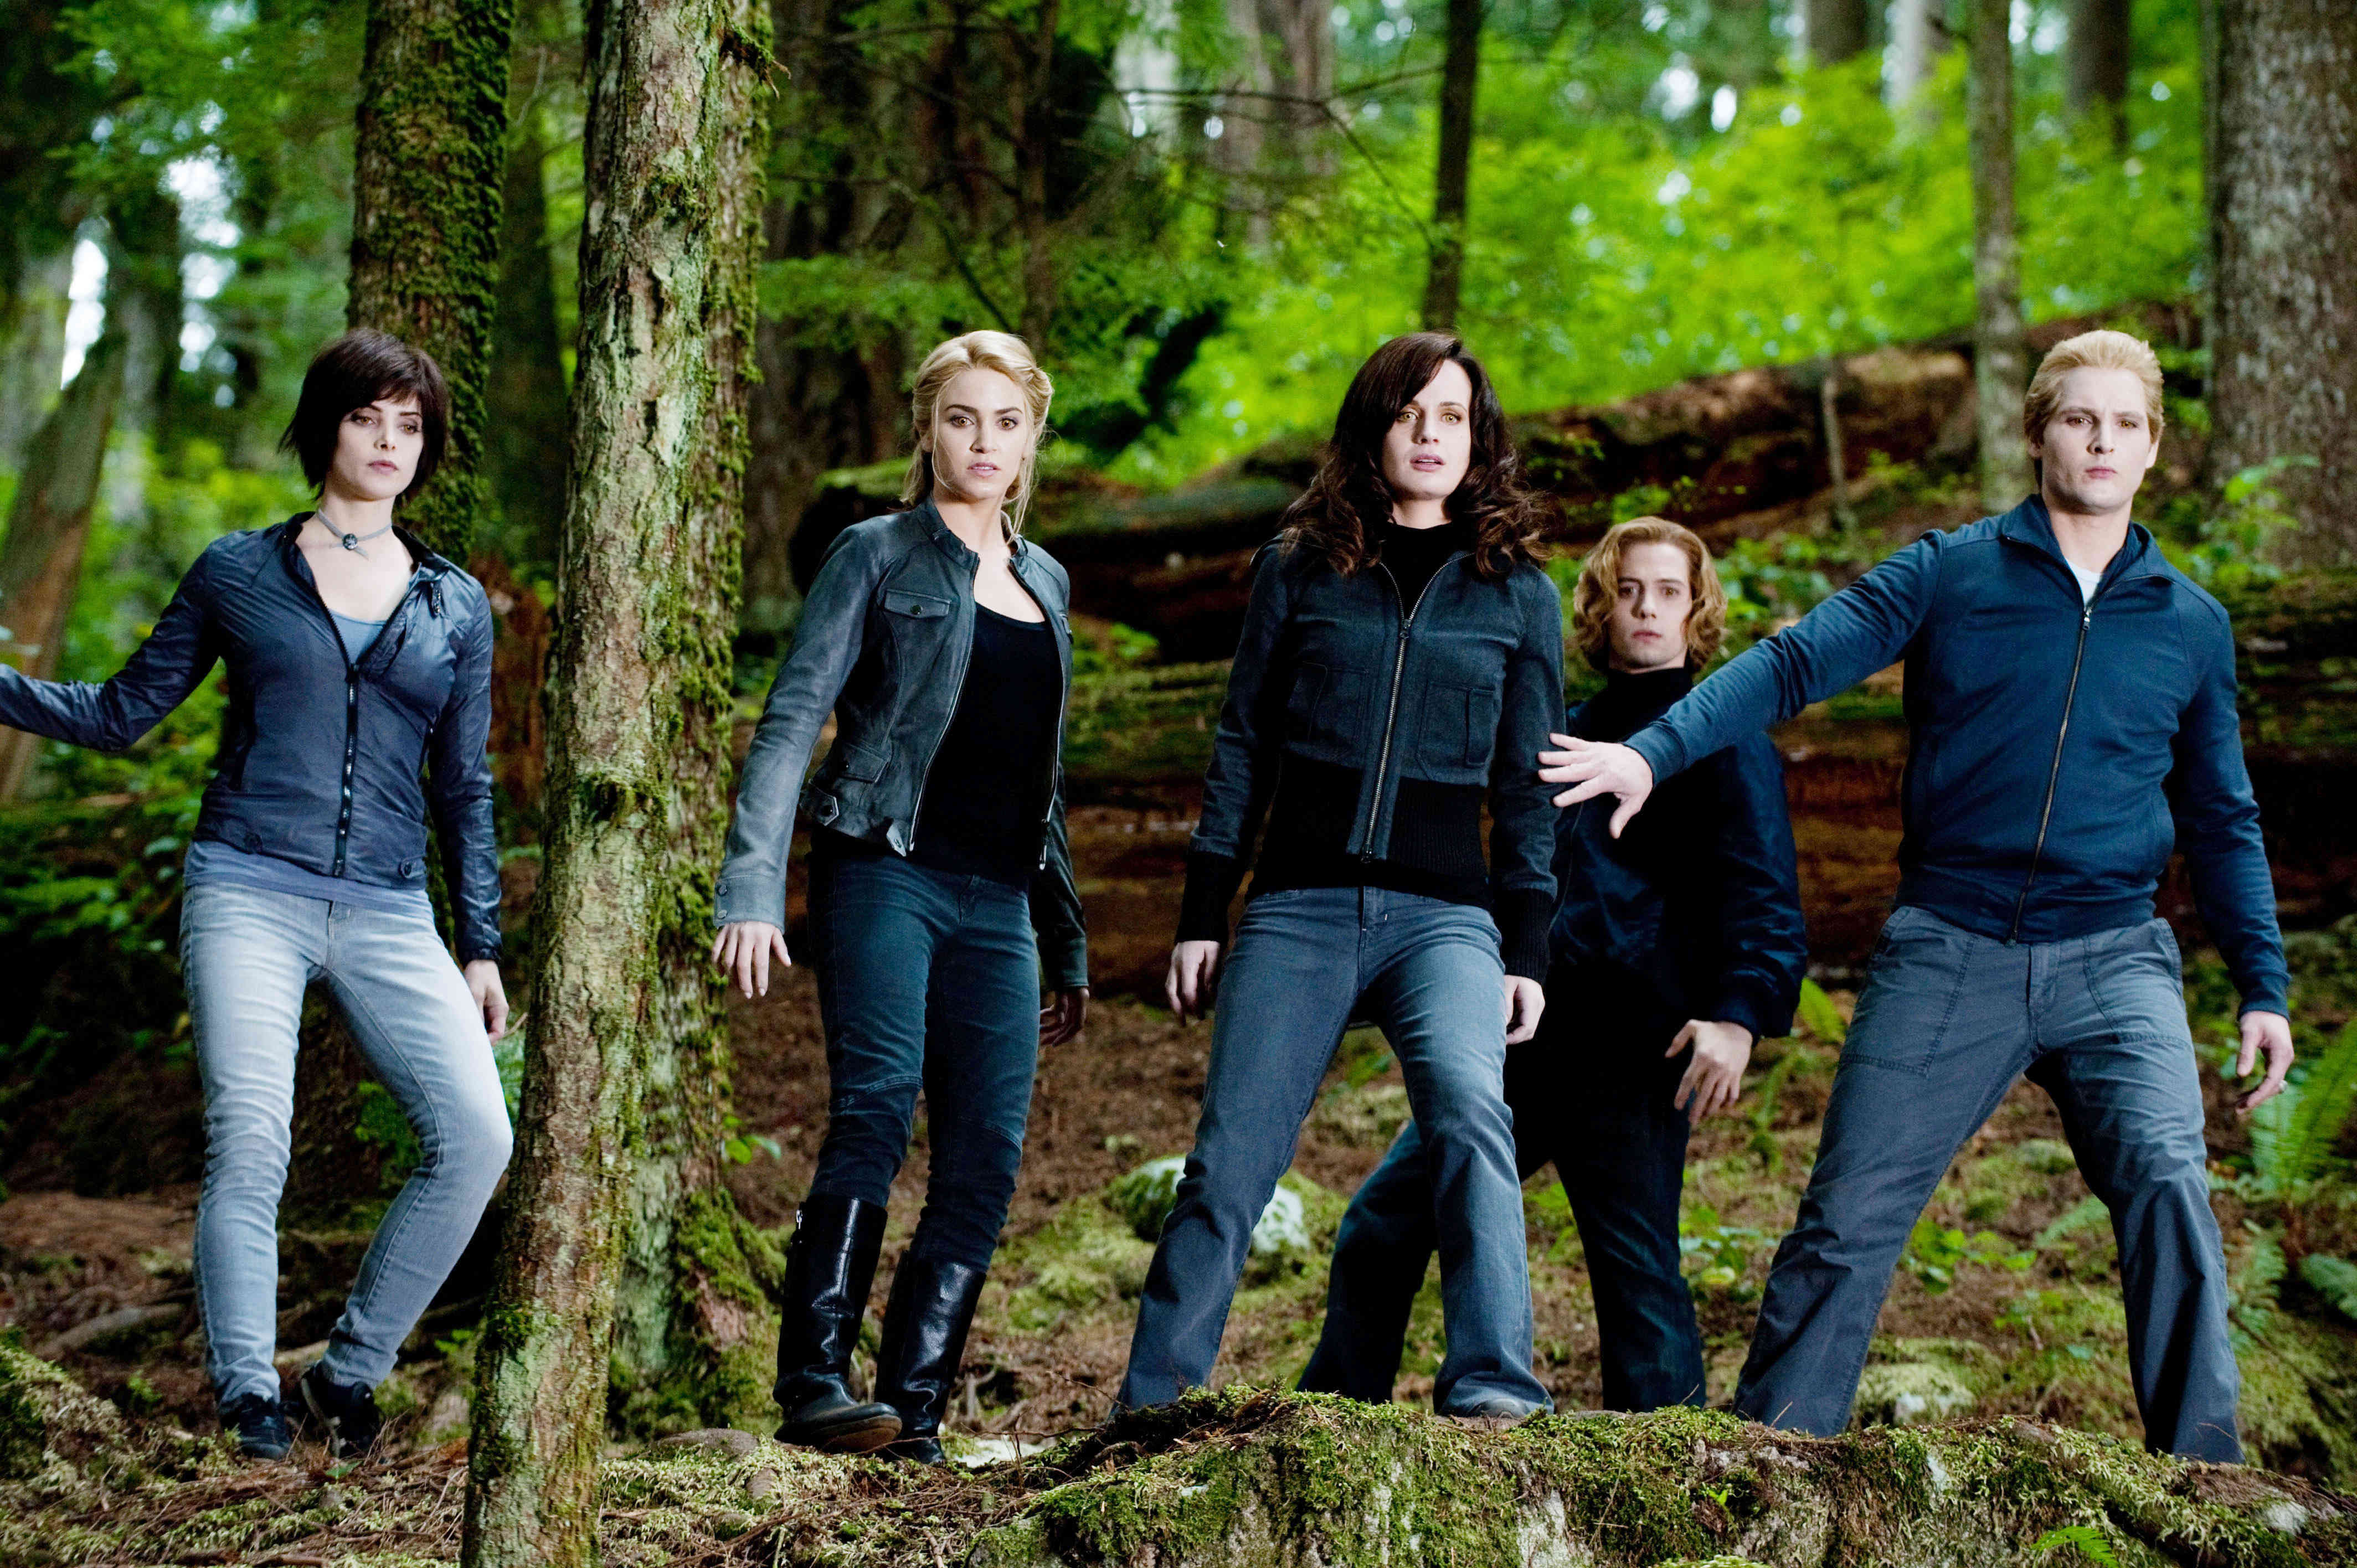 Ashley Greene, Nikki Reed, Elizabeth Reaser, Jackson Rathbone and Peter Facinelli in Summit Entertainment's The Twilight Saga's Eclipse (2010)